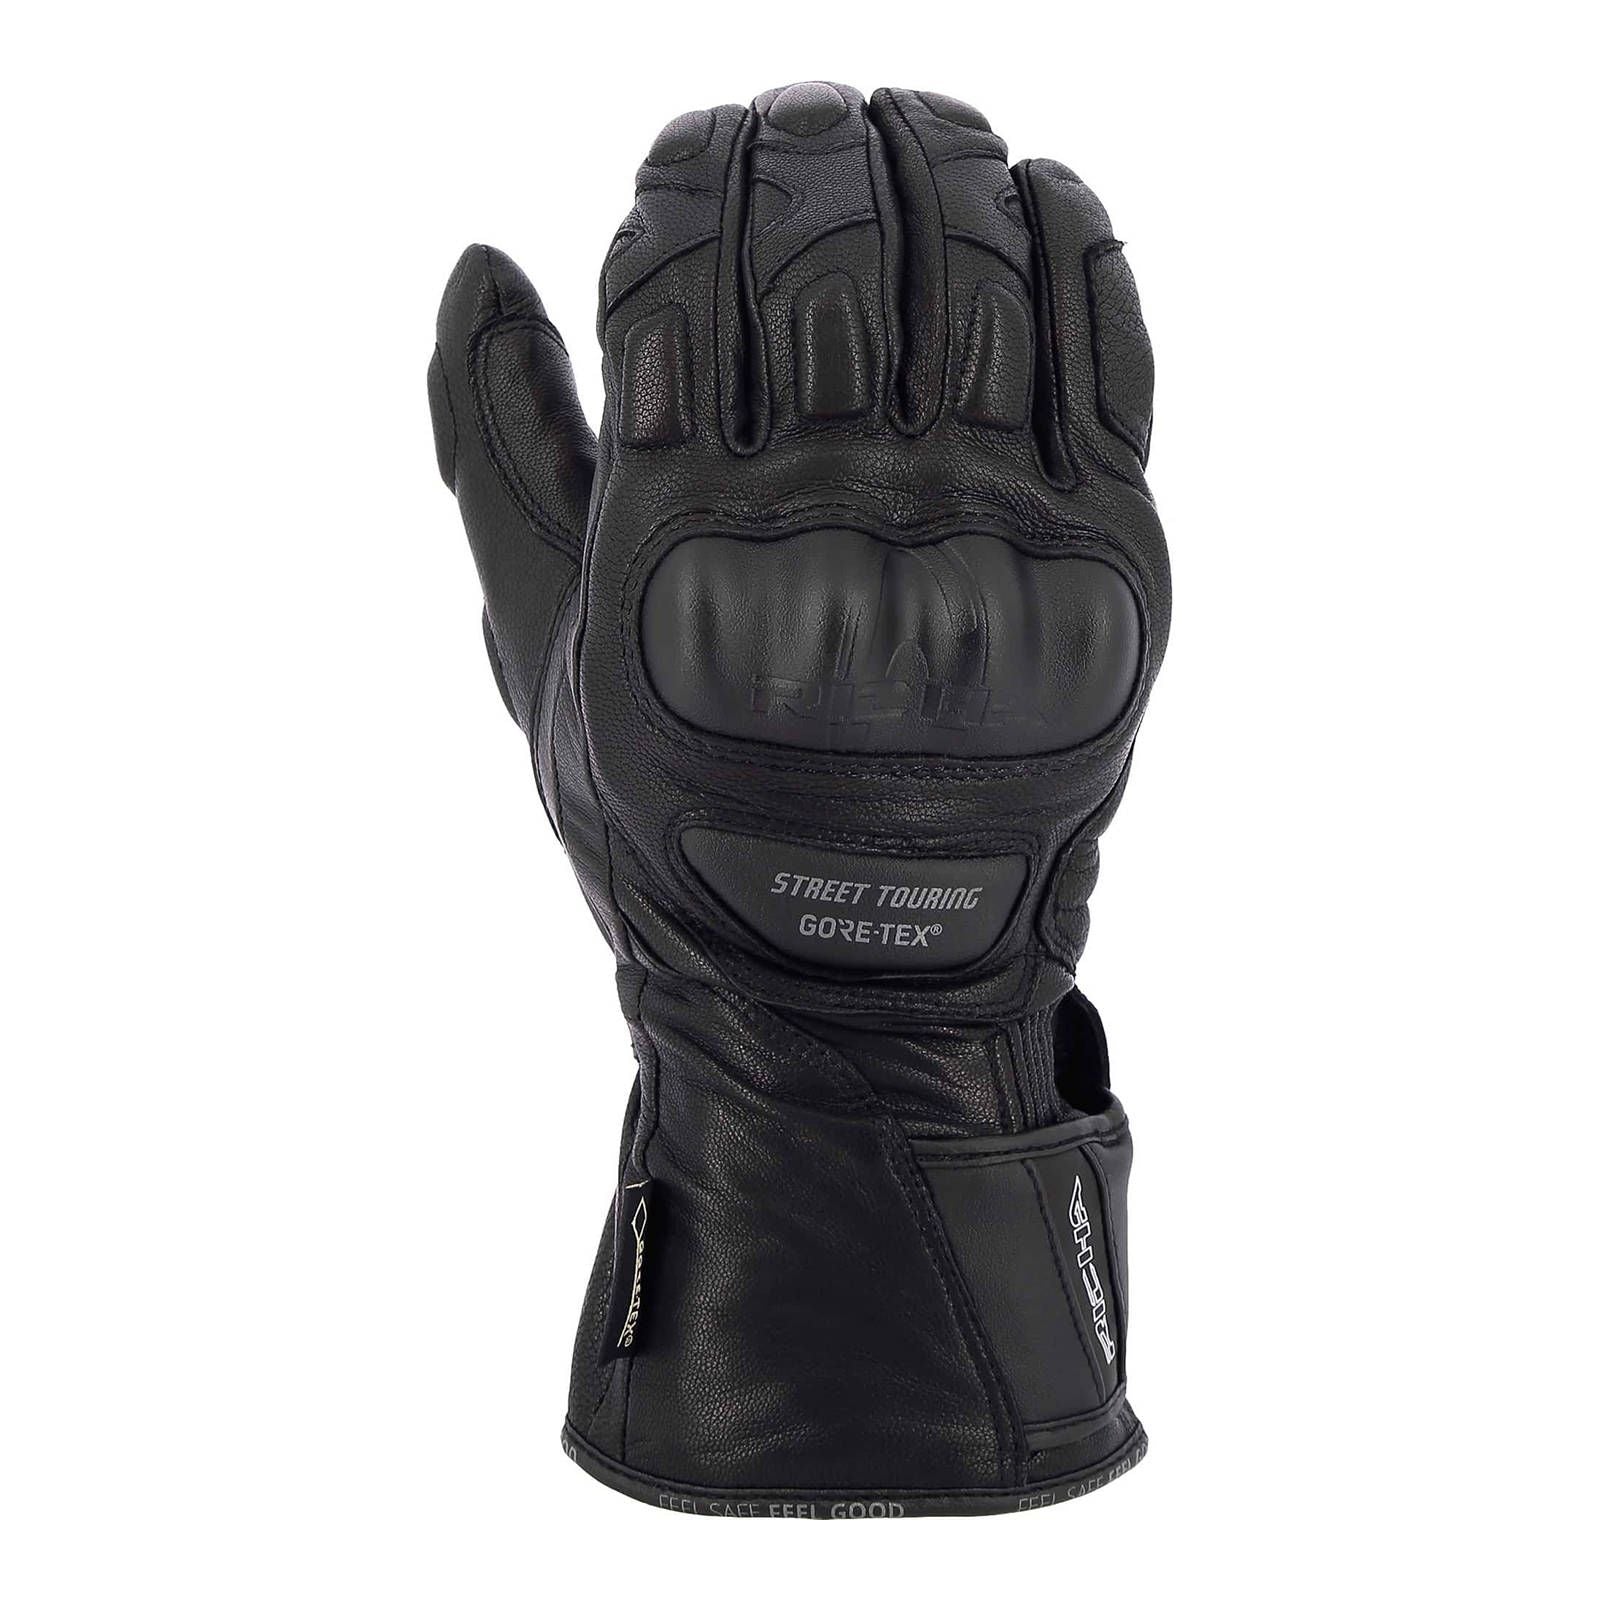 New RICHA Street Touring Leaher Gore-Tex Glove - Black (L) #RAGSTGBL